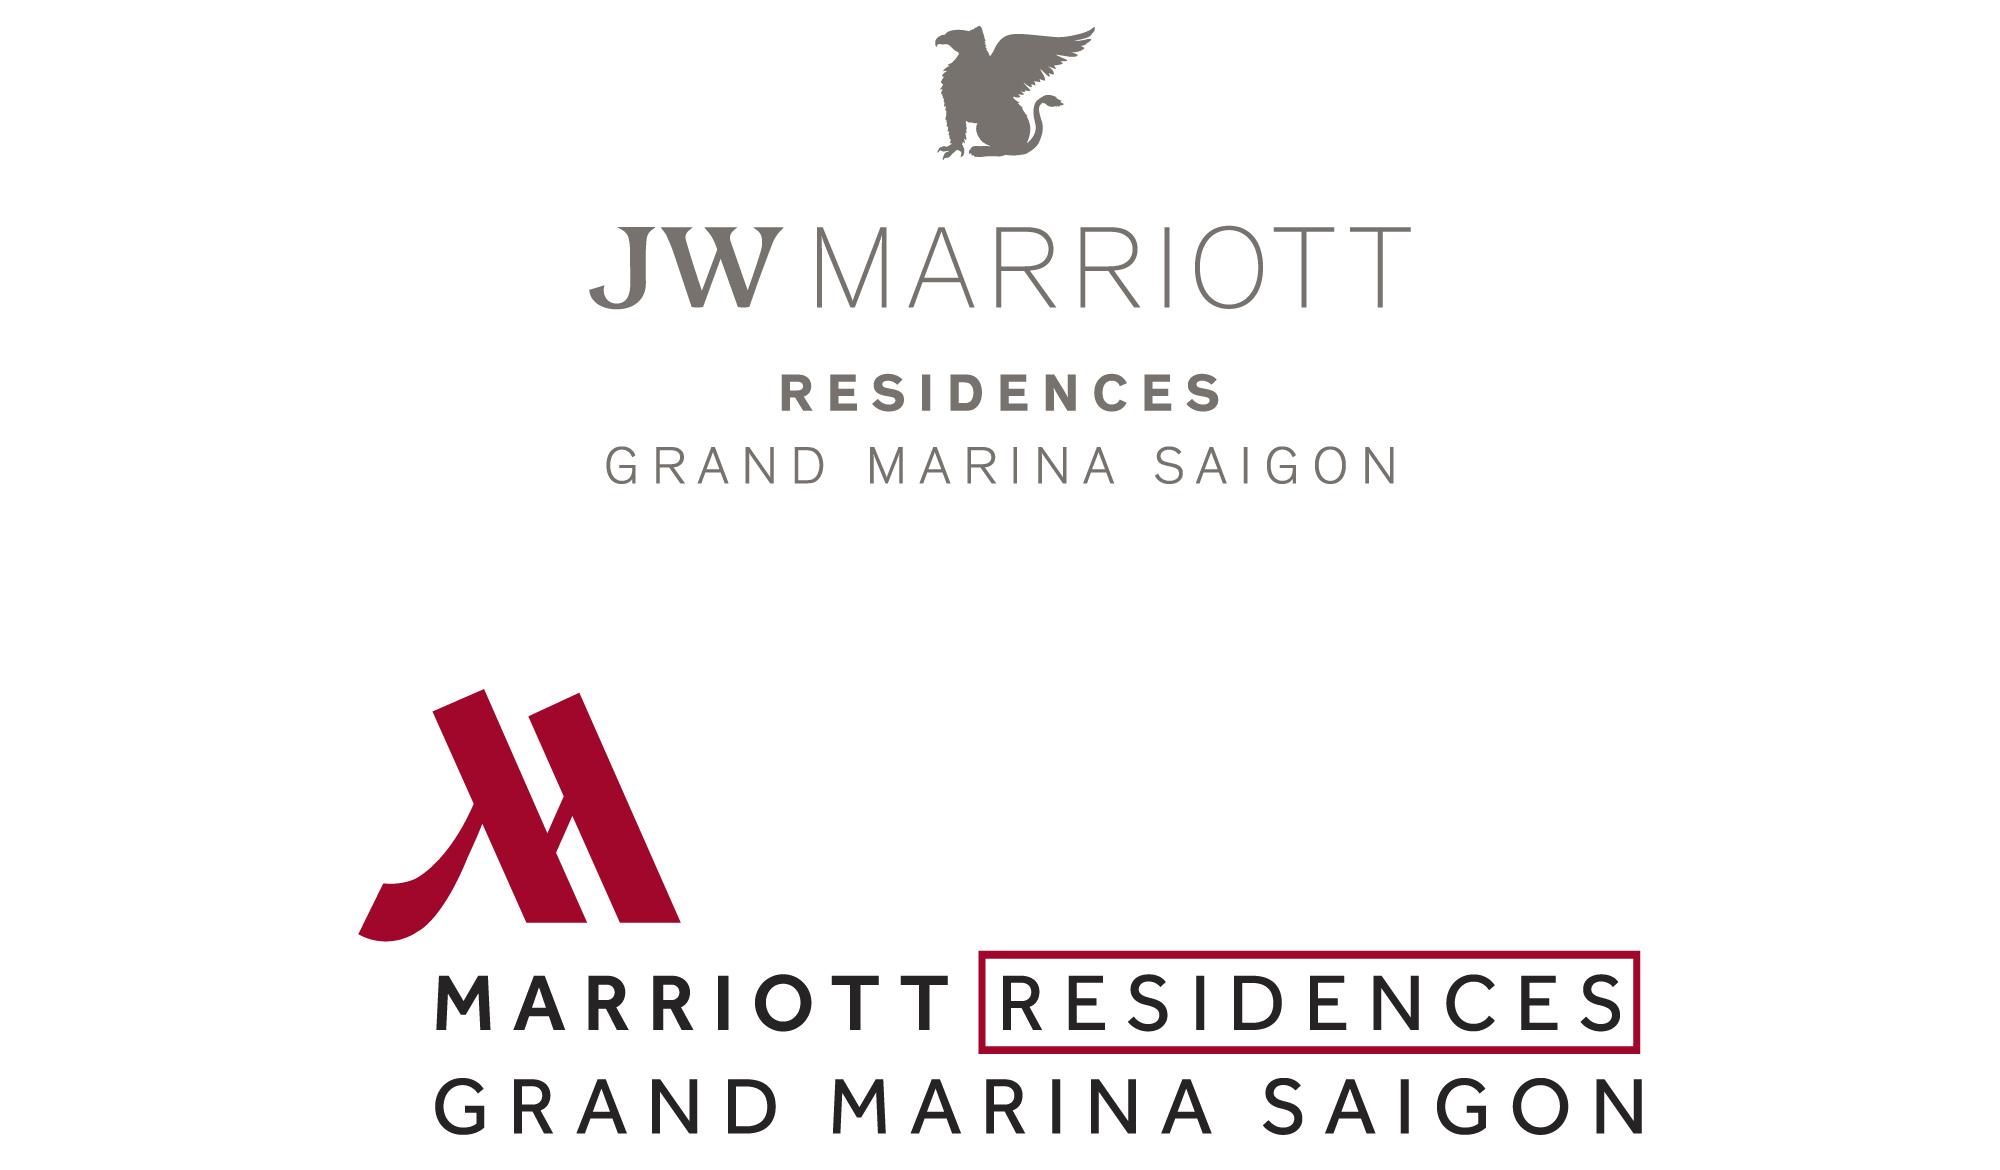 JW Marriott - Marriott Residences Grand Marina Saigon